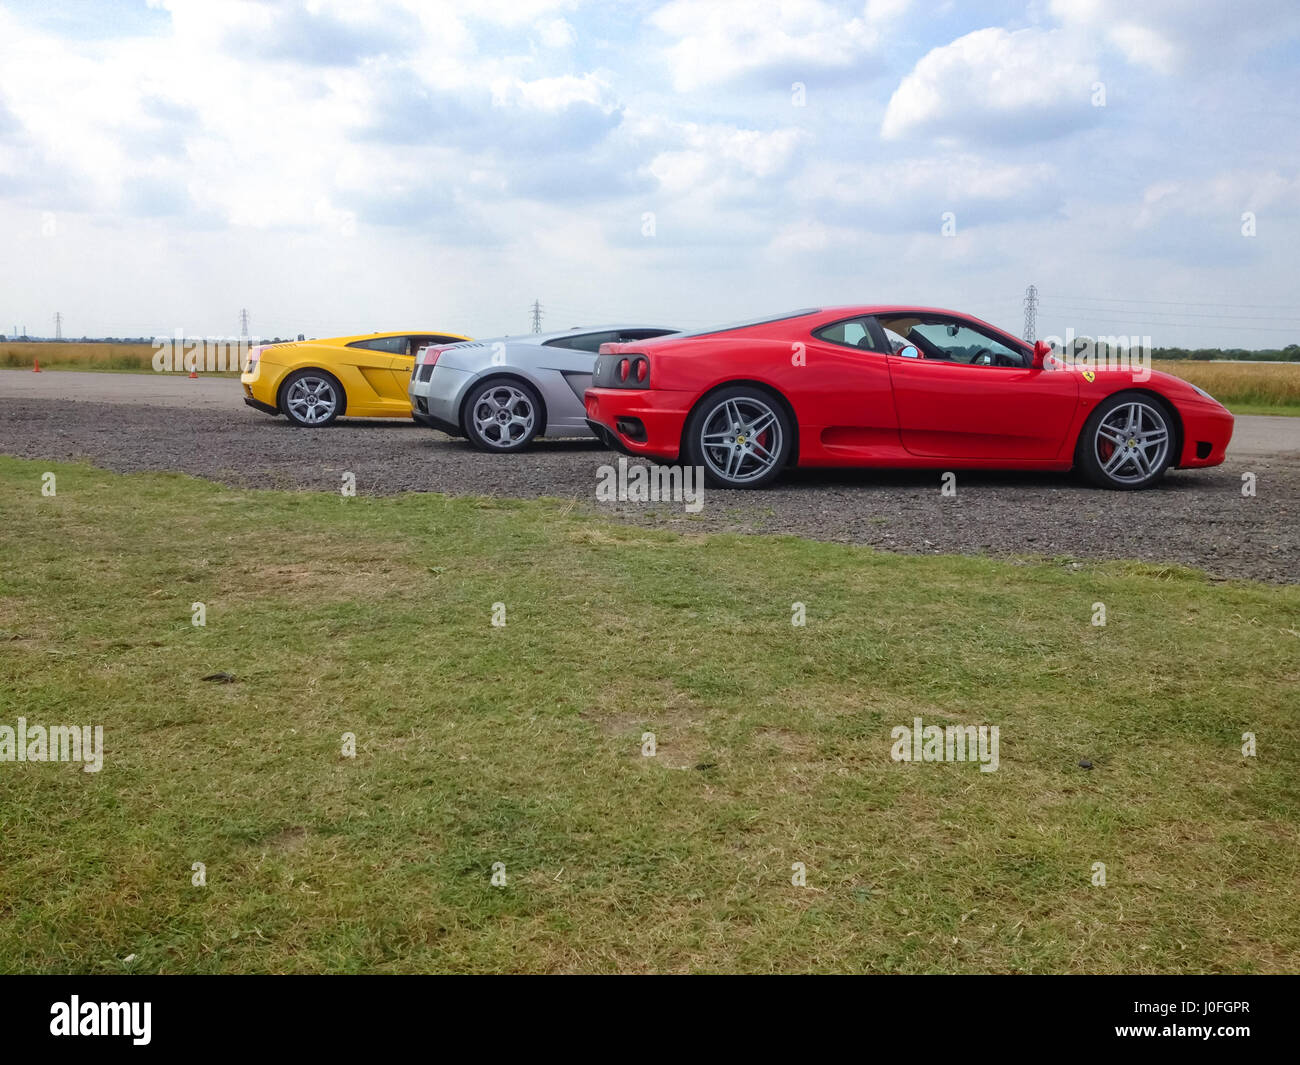 Three Super Sars - Red Ferrari 488, Silver Lamborghini Murcielago, Yellow Lamborghini  Murcielago Stock Photo - Alamy